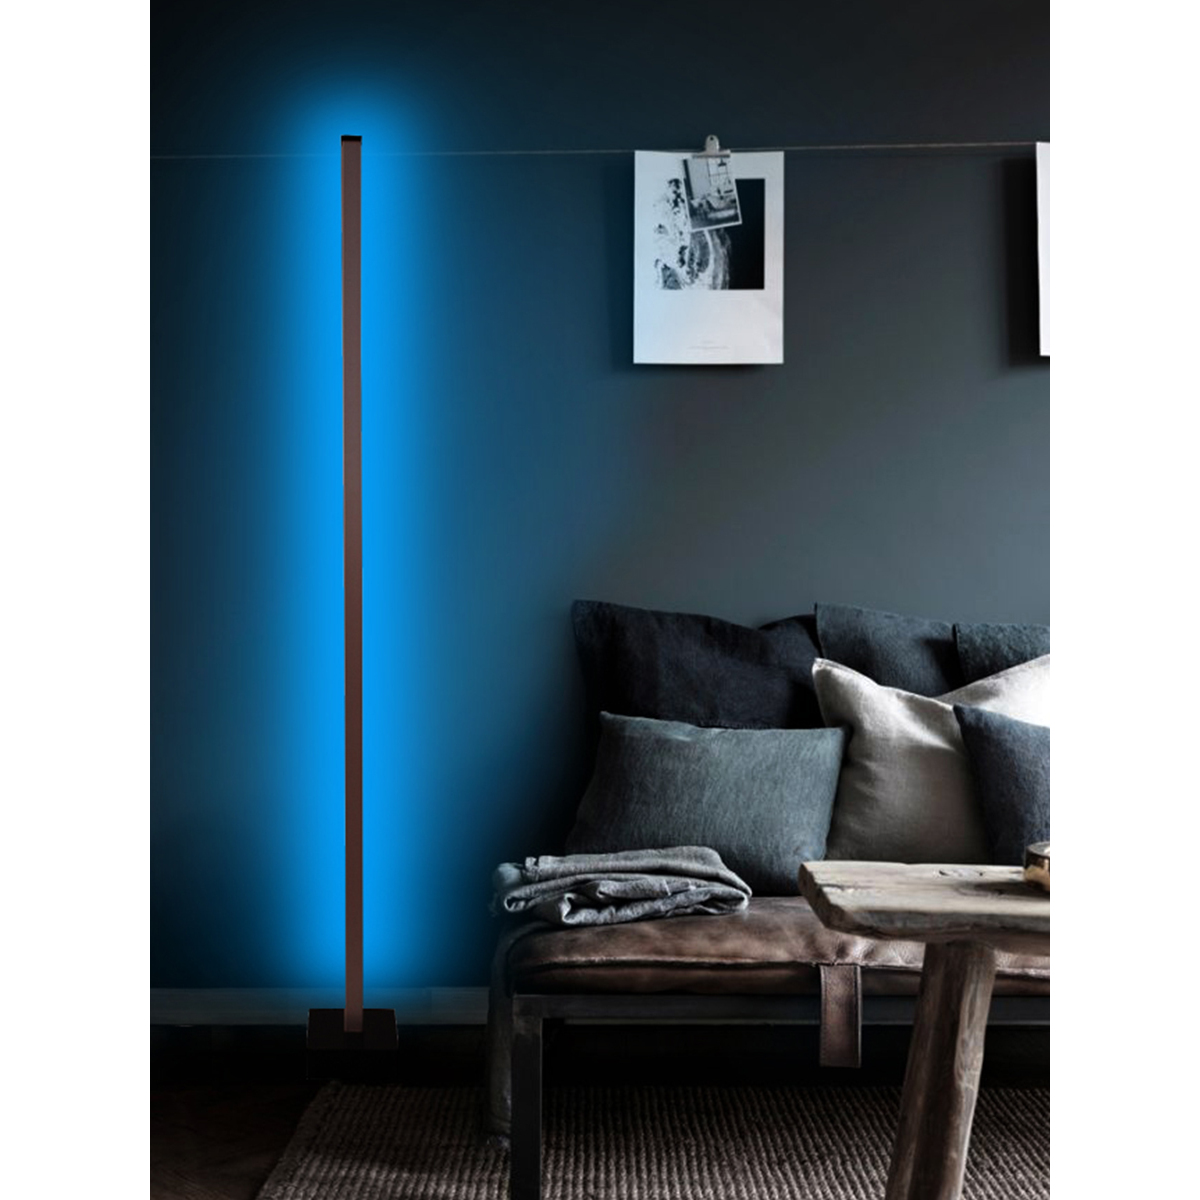 Led Dekoratif Lambader -Led Lamba Işık Sistemi- Siyah- Full Rgb Renk